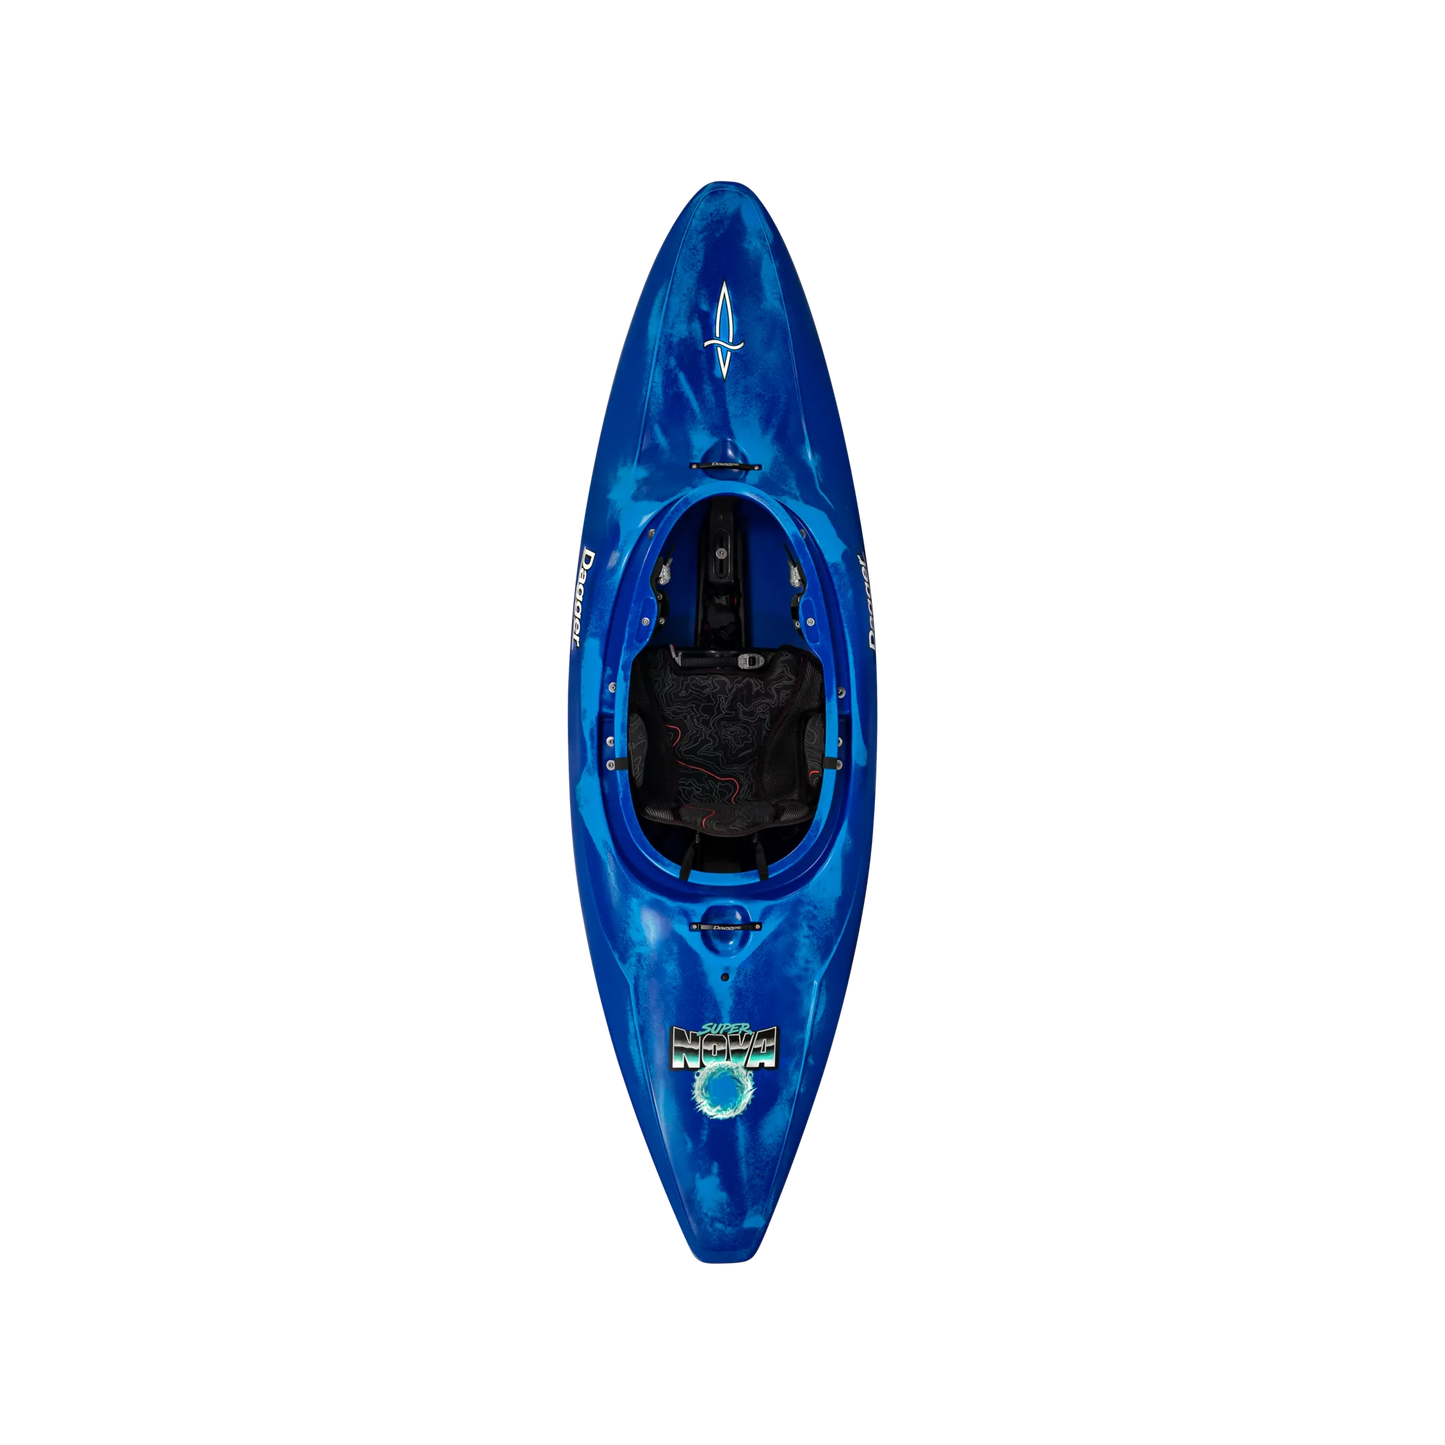 Blue modern design Super Nova kayak with black seat and footrest viewed from above on a dark background.